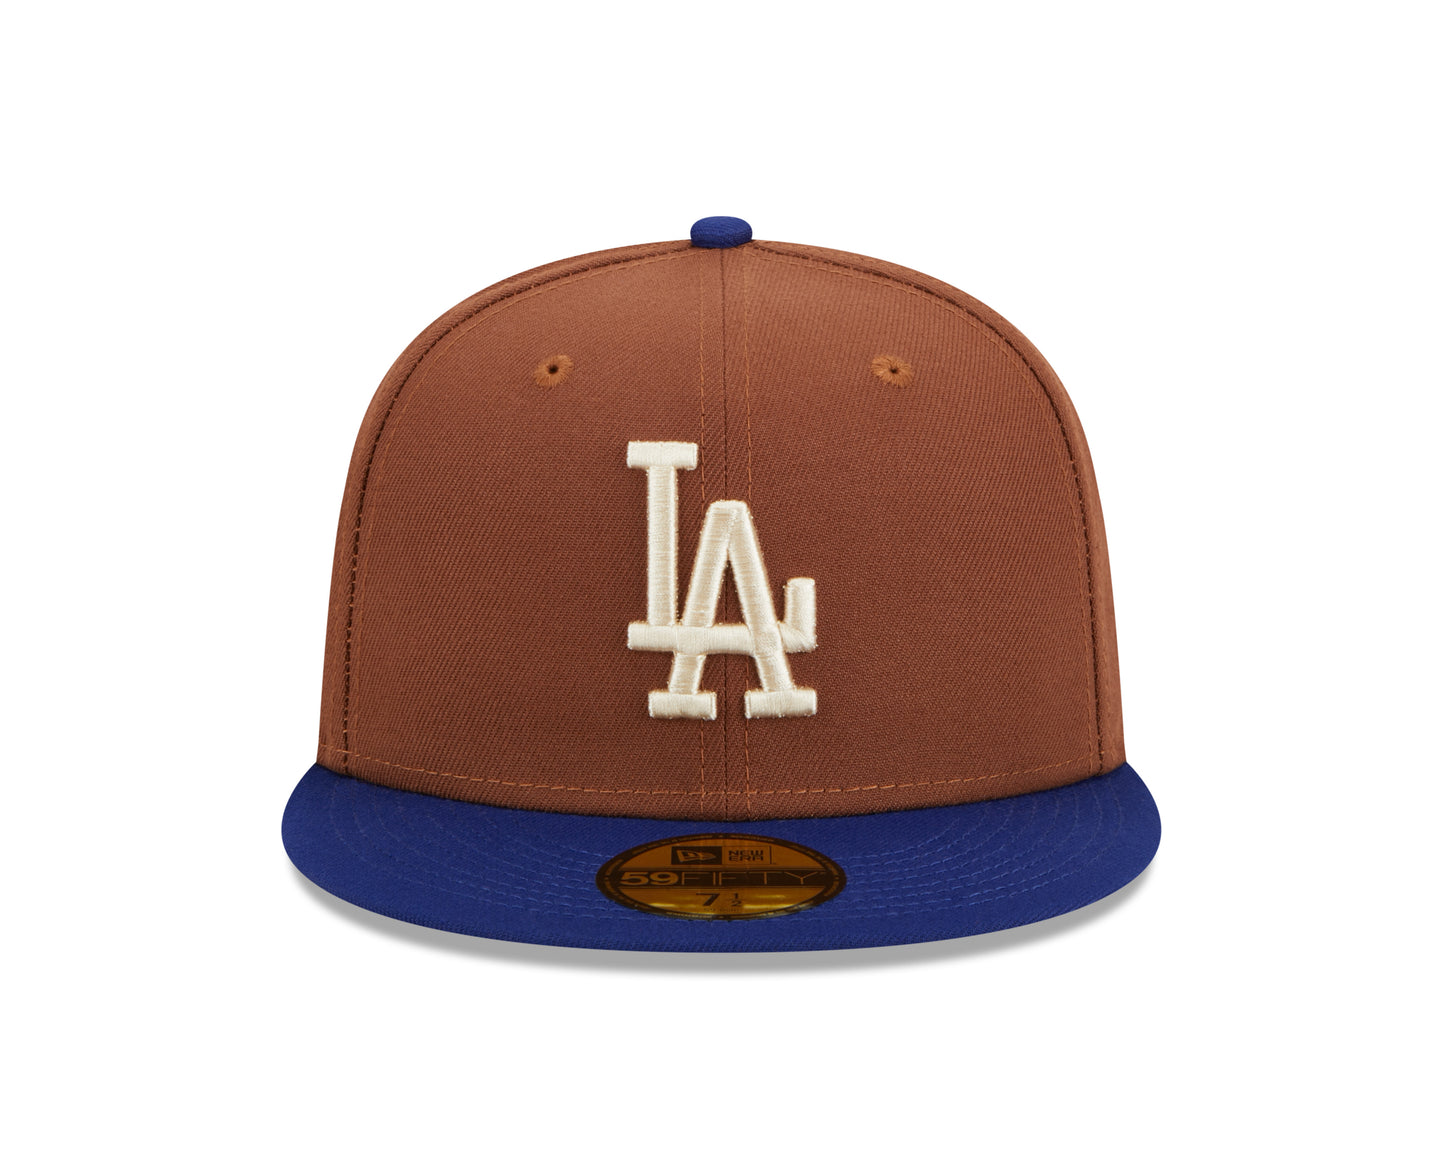 New Era - Los Angeles Dodgers - HARVEST 59FIFTY Cap - Brown - Headz Up 